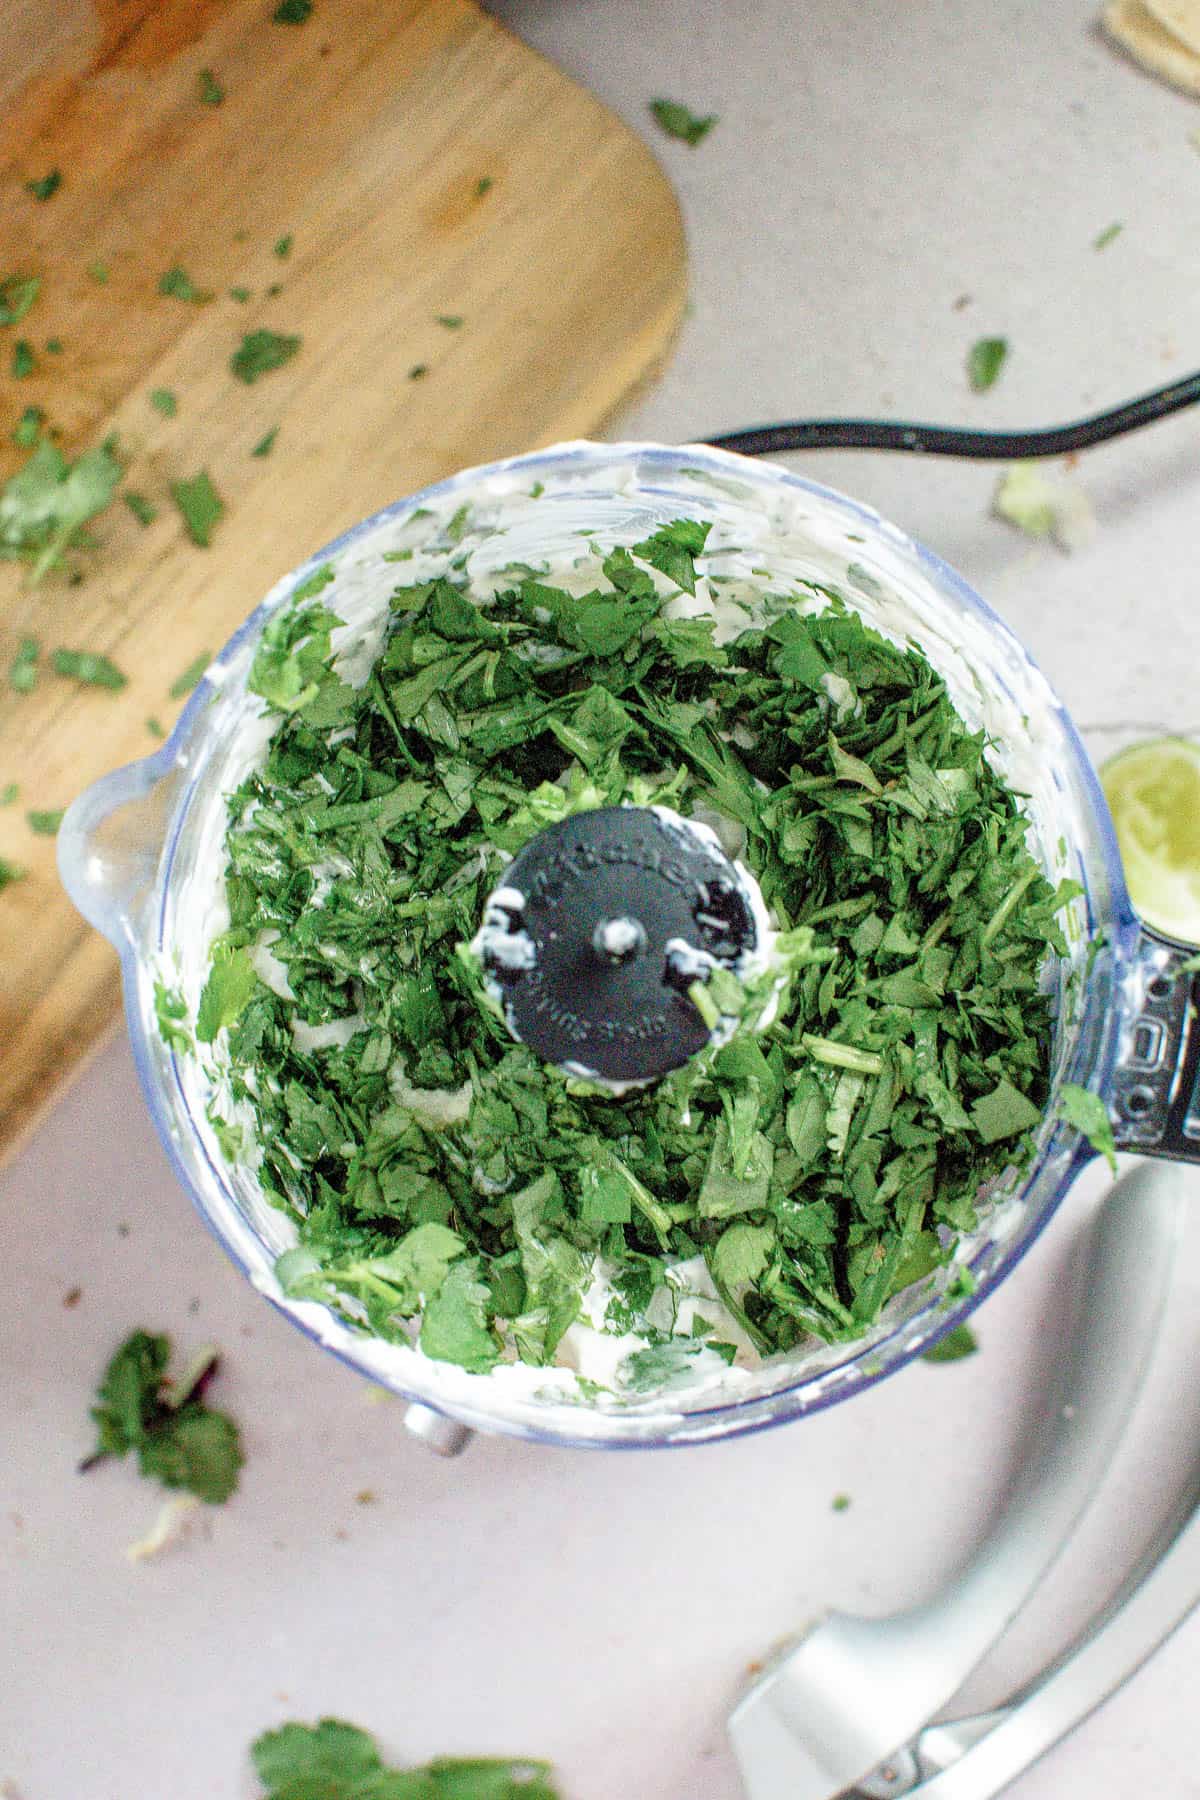 A food processor filled with cilantro and limes ready to enhance blackened mahi mahi tacos.